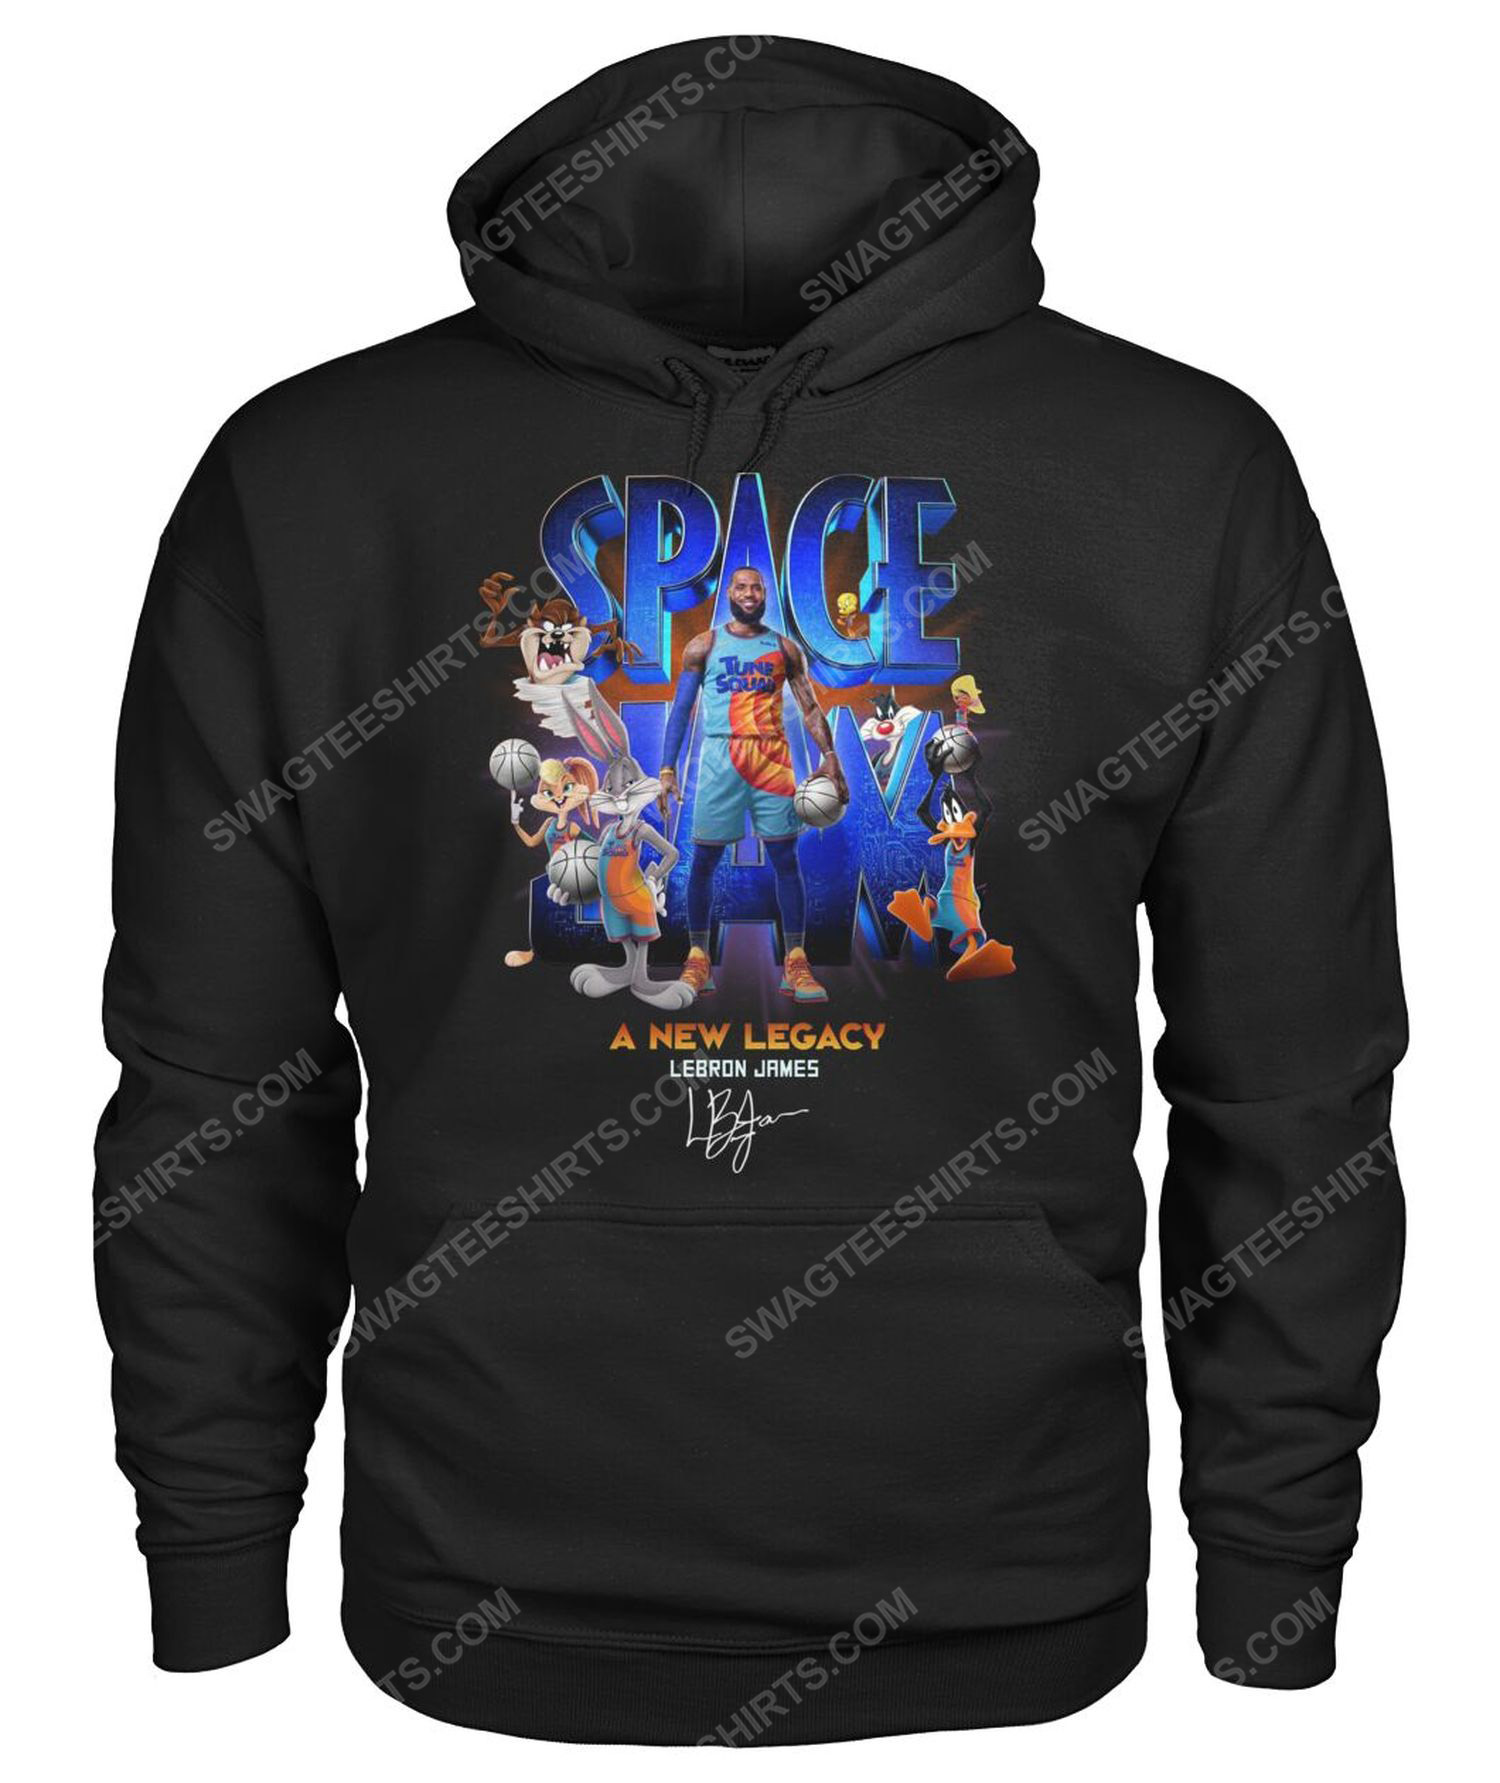 Space jam a new legacy lebron james hoodie